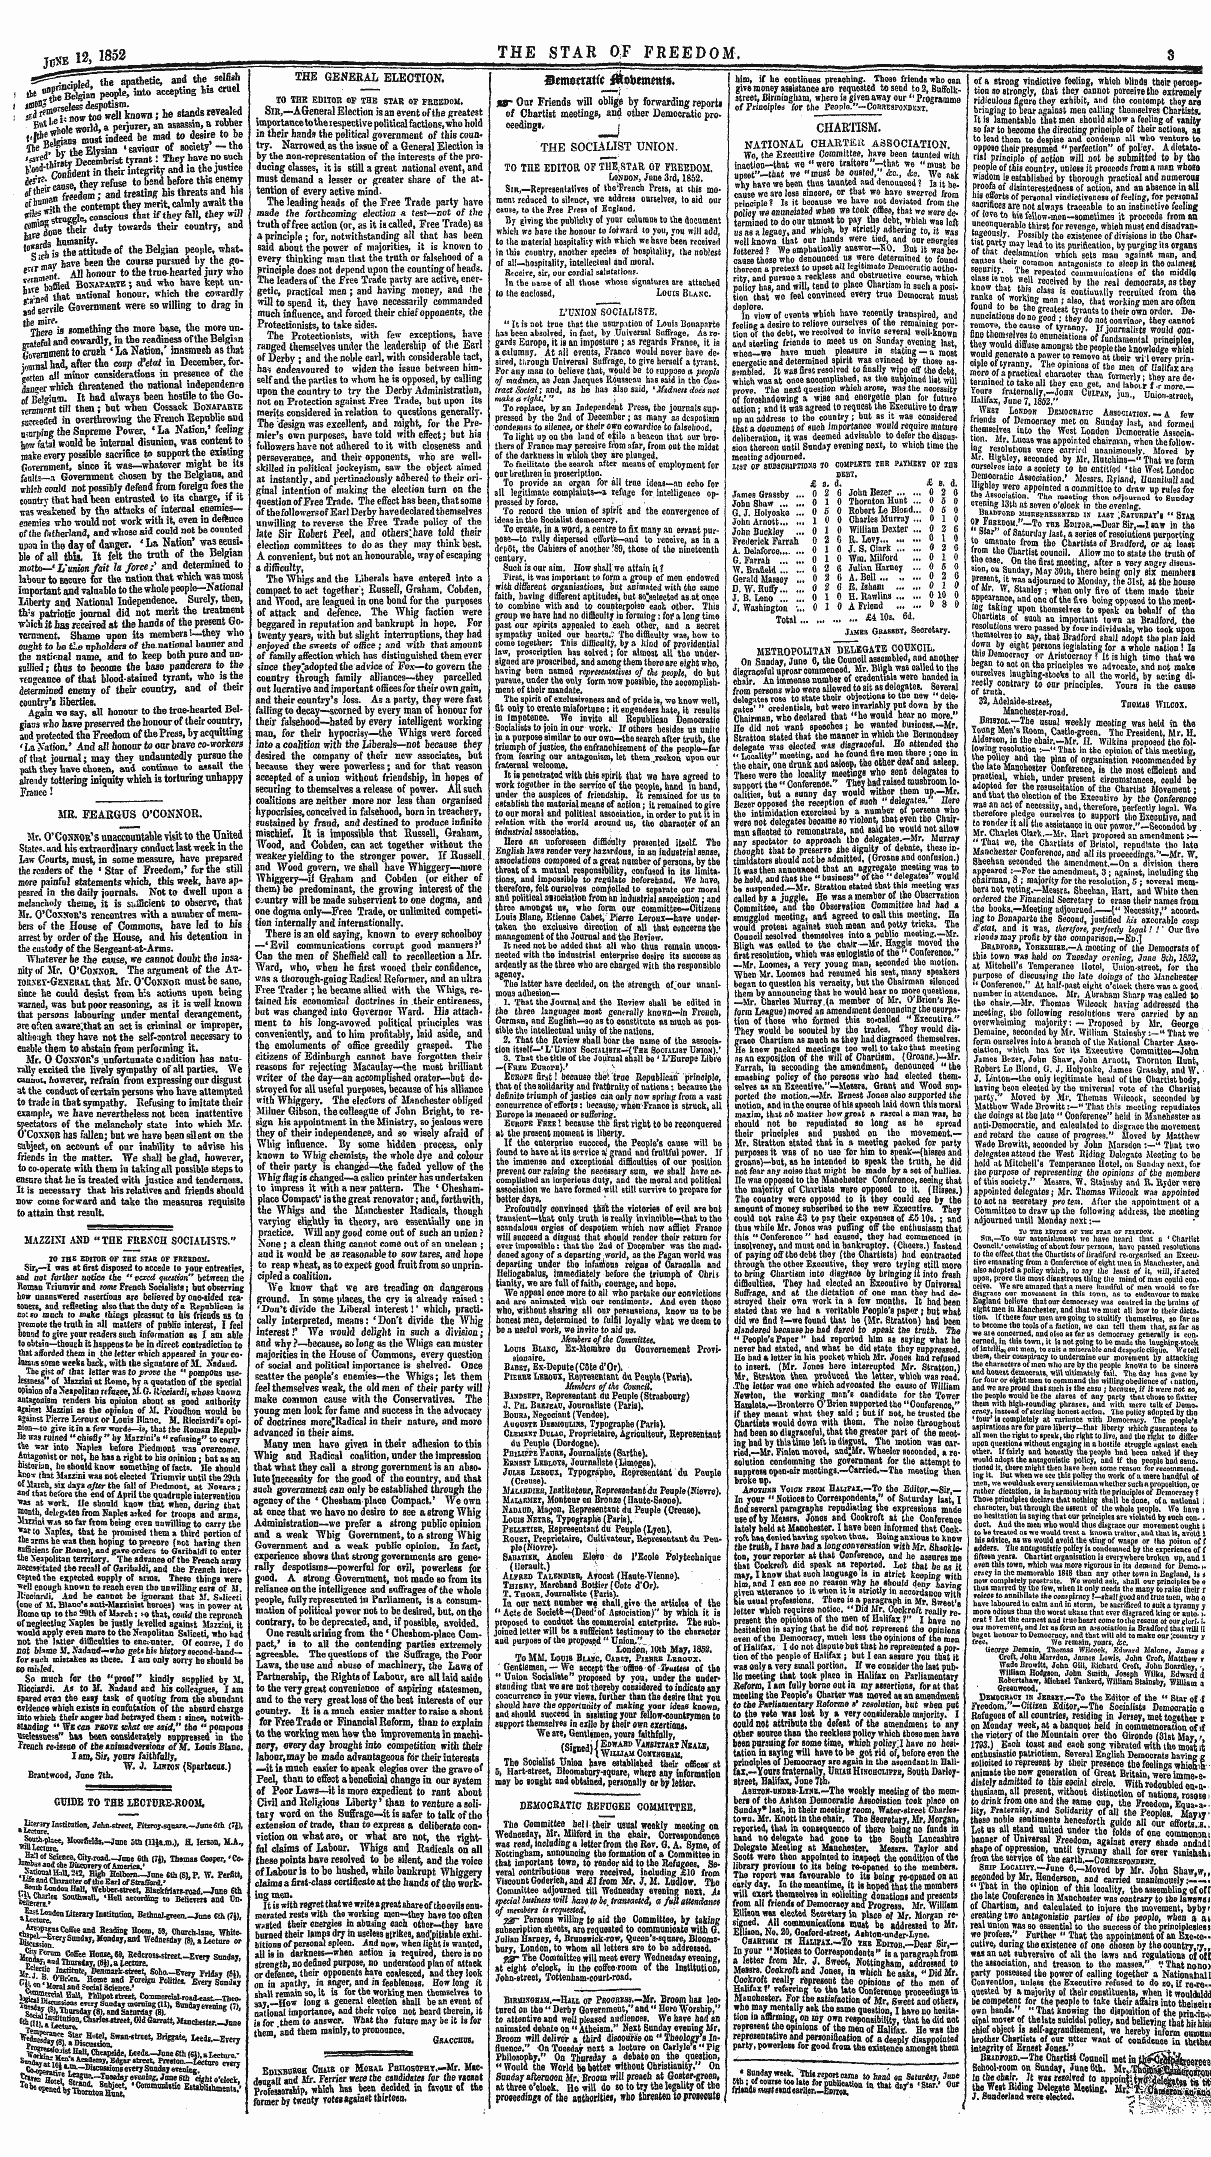 Northern Star (1837-1852): jS F Y, 2nd edition - Mr. Feabgus O'Connor. *Lr. O'Coskor's Un...